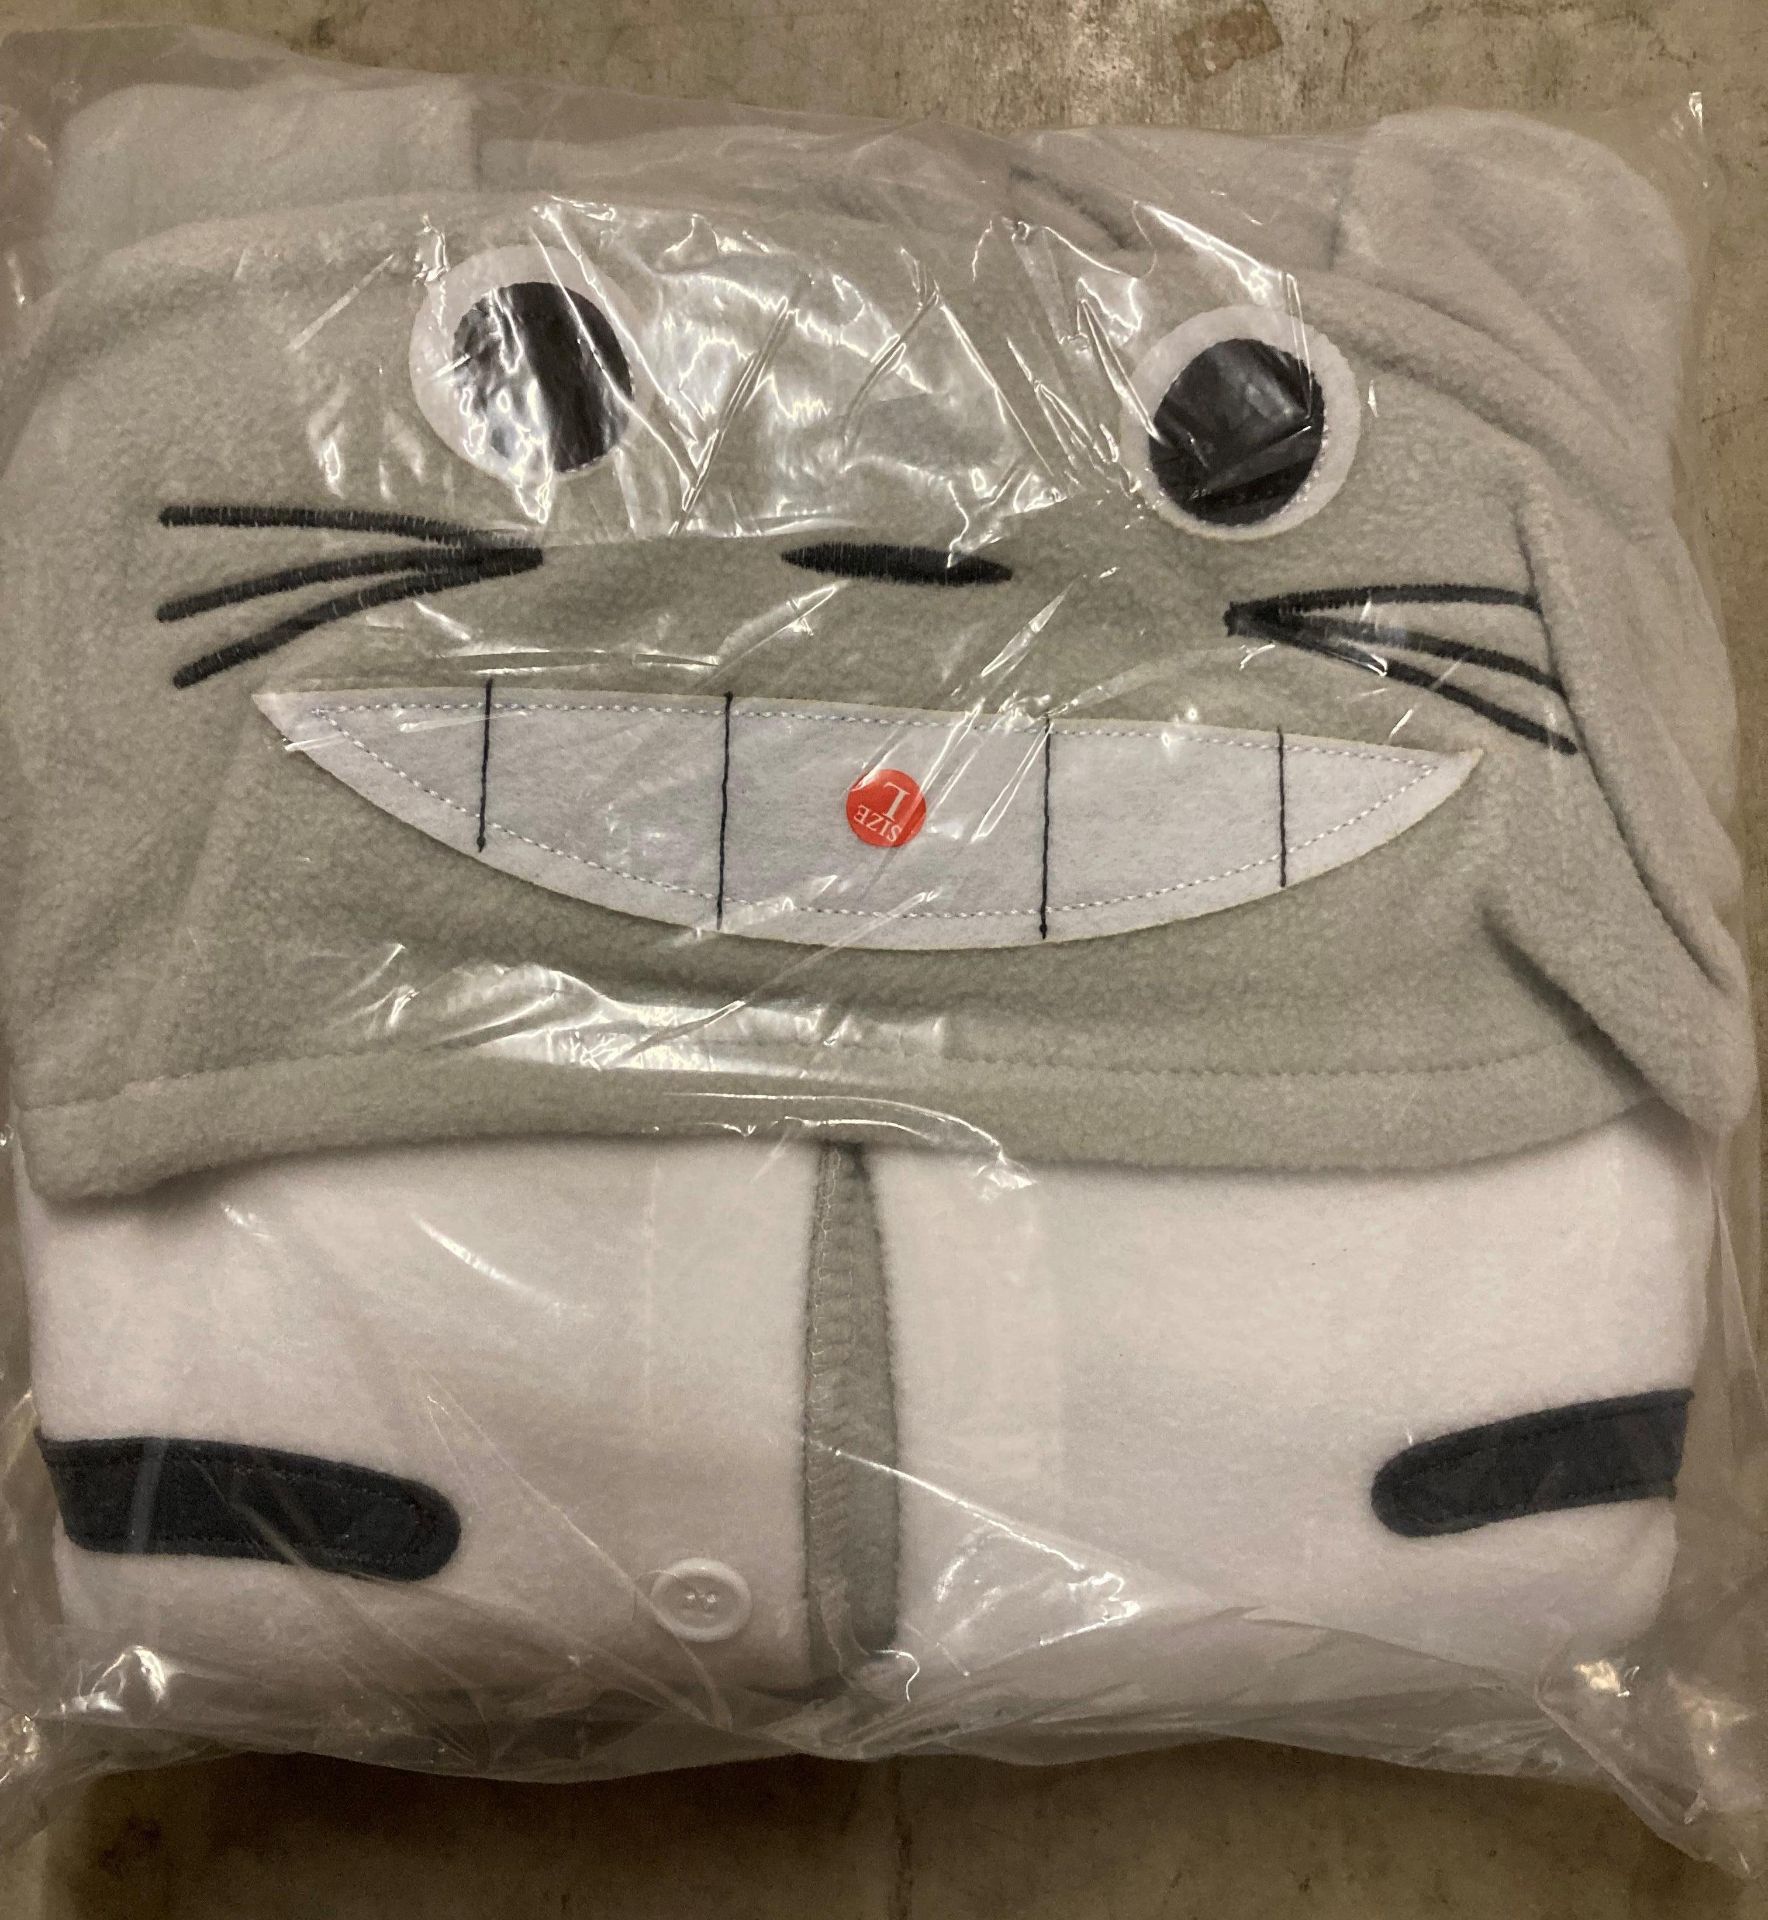 Contents to box - 13 x Totoro Wanziee onesies in various sizes (saleroom location: K06 floor)